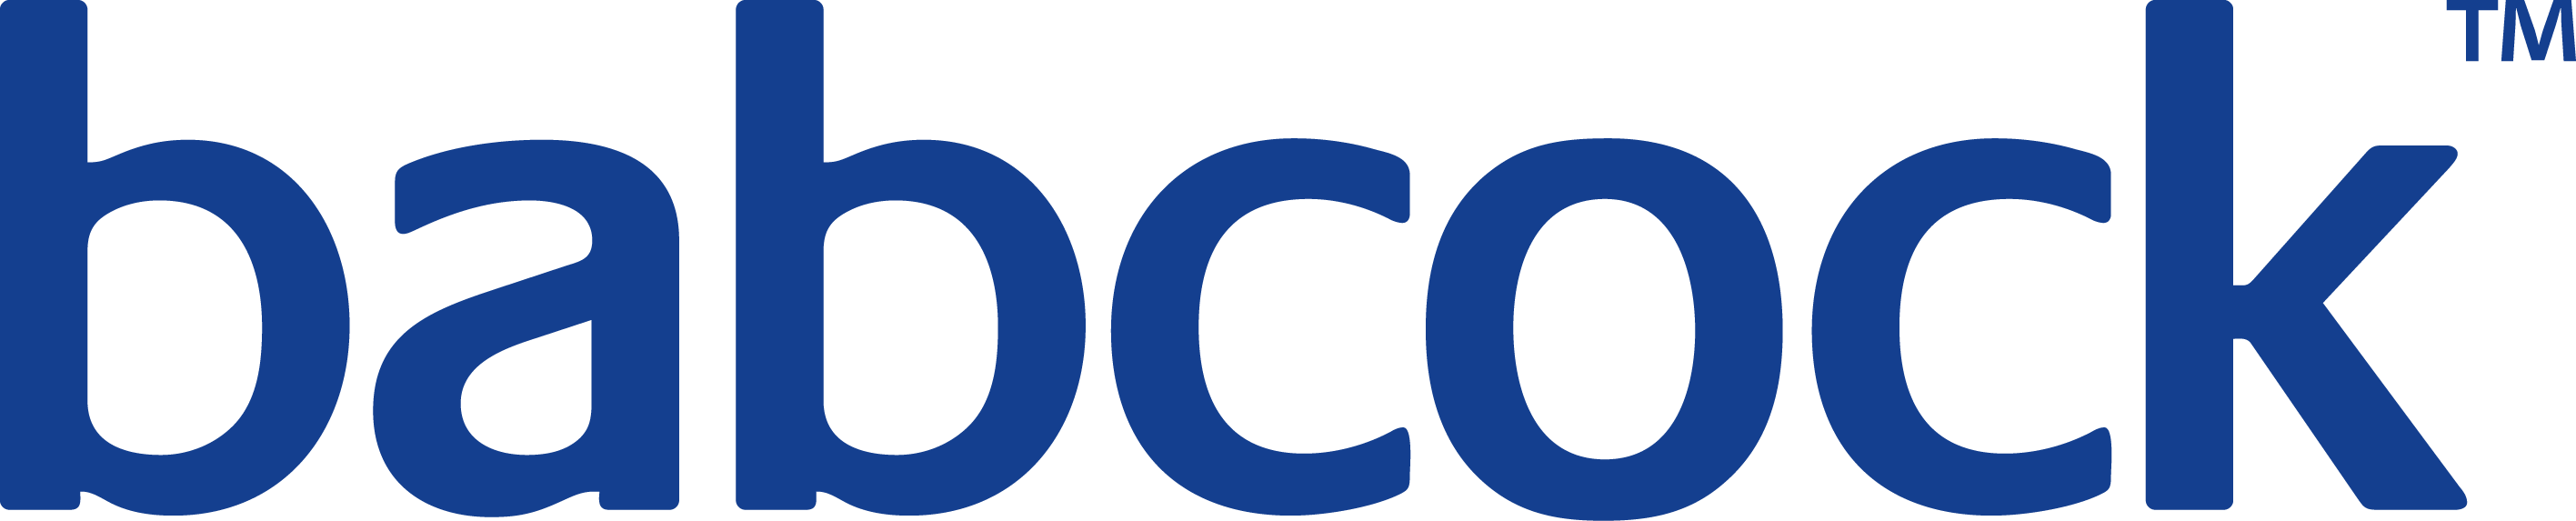 Babcock Critical Services Ltd